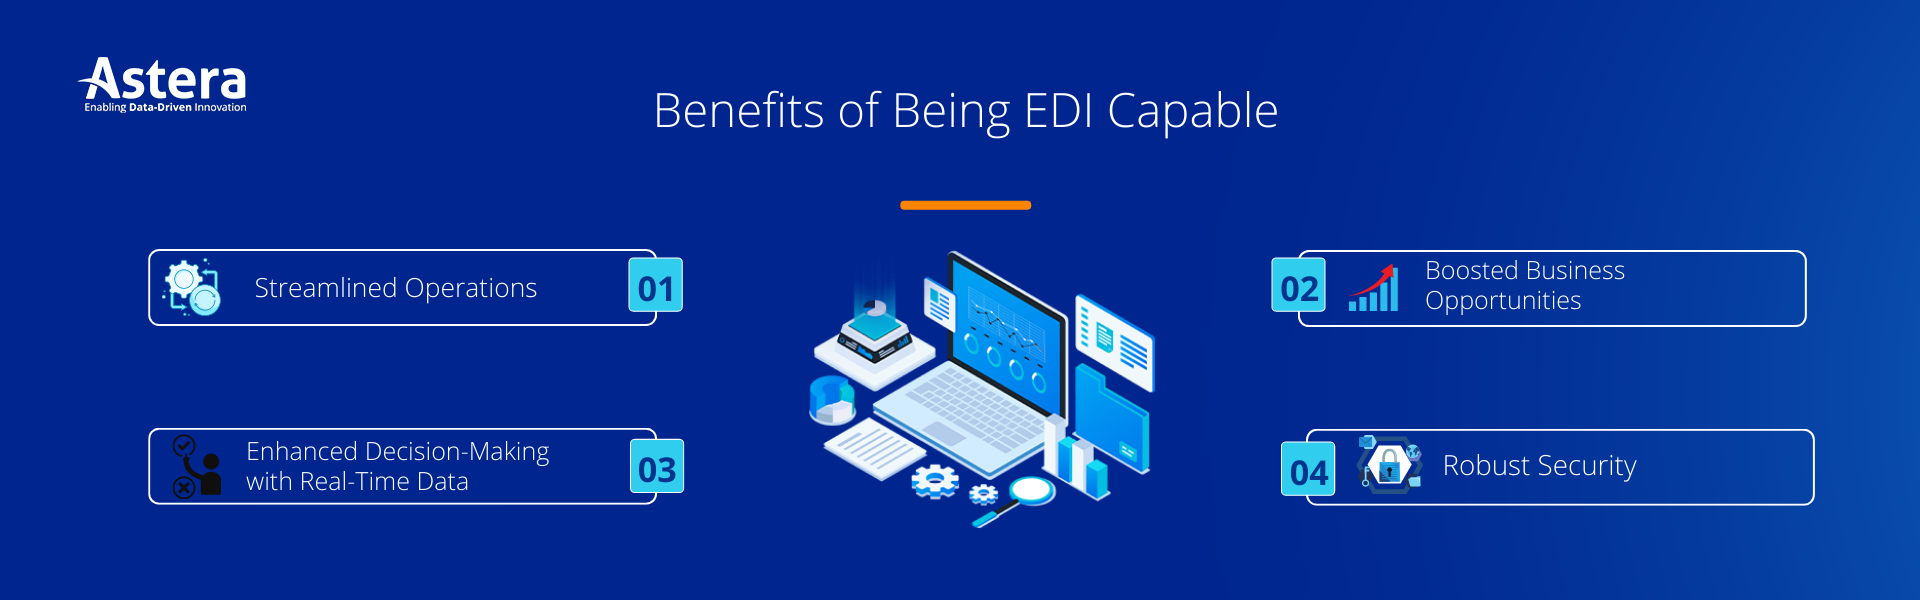 Beneficios de ser compatible con EDI